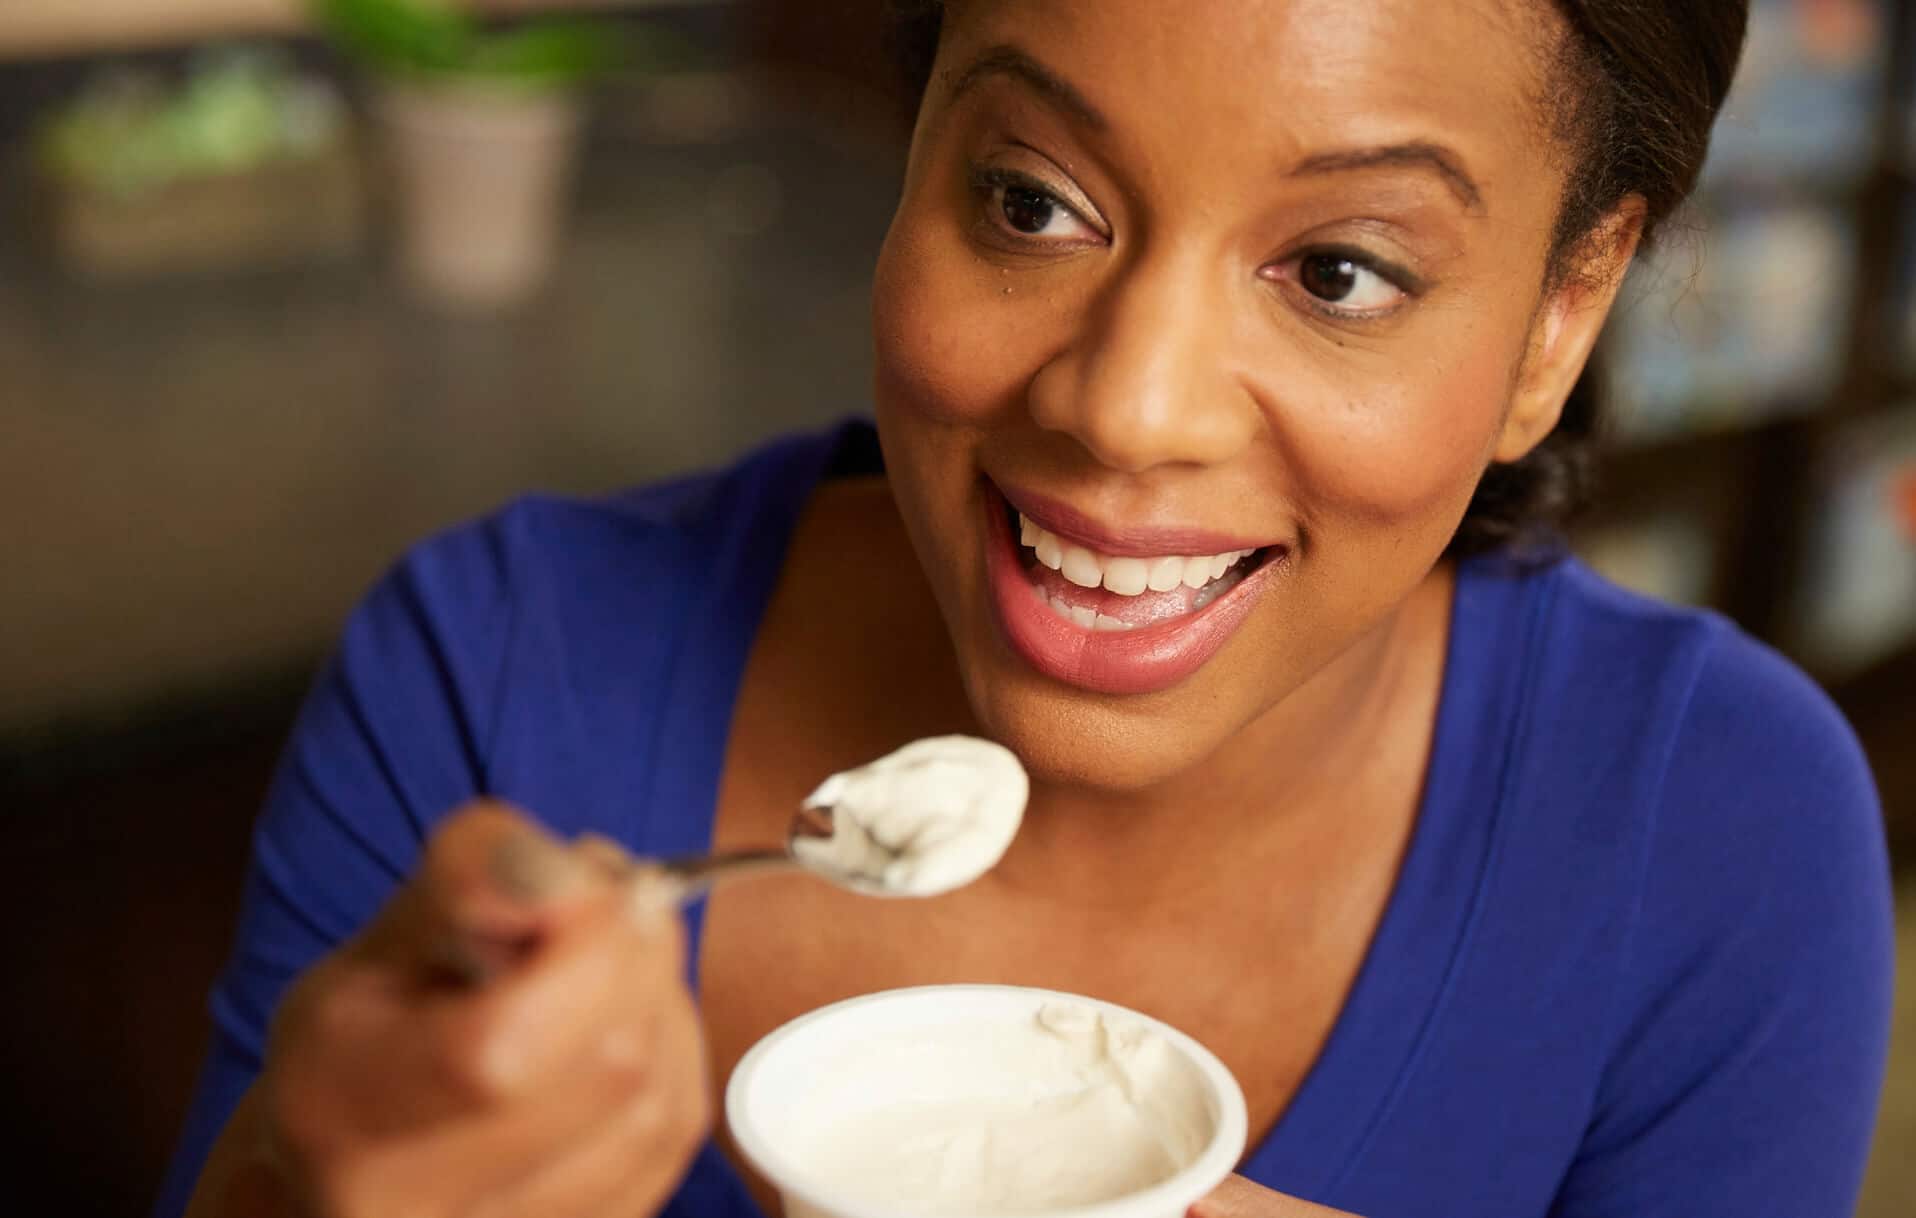 Woman eating a bowl of yogurt